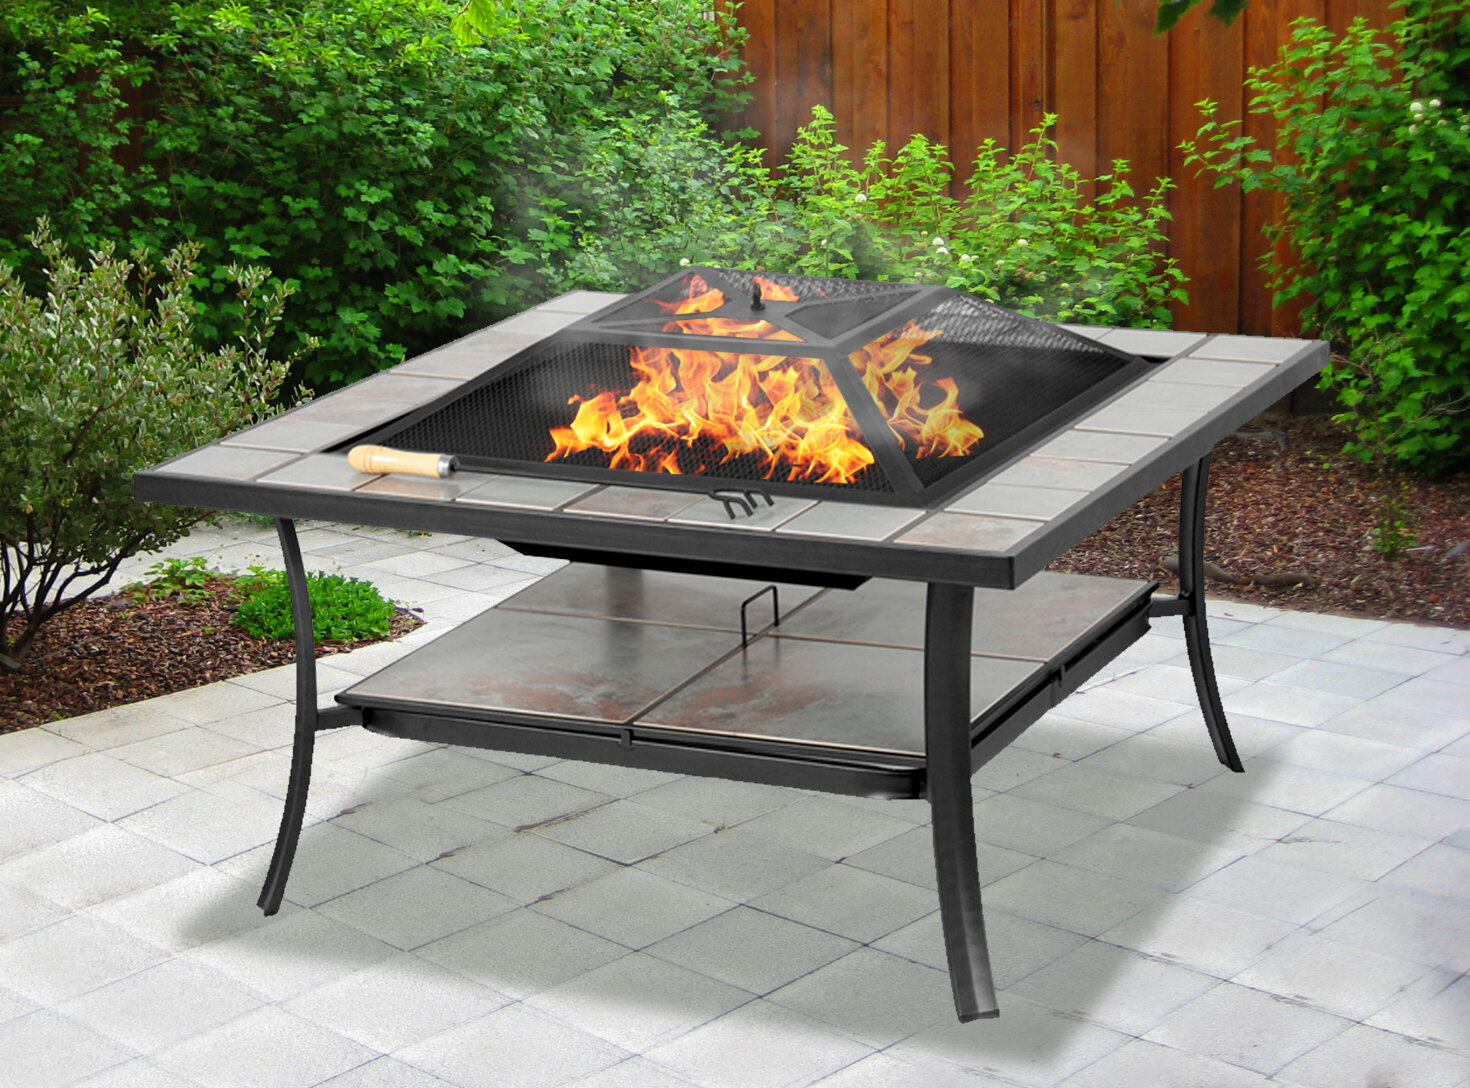 Dakota Fields Mcchesney Steel Charcoal Wood Burning Fire Pit Table Reviews Wayfair Co Uk